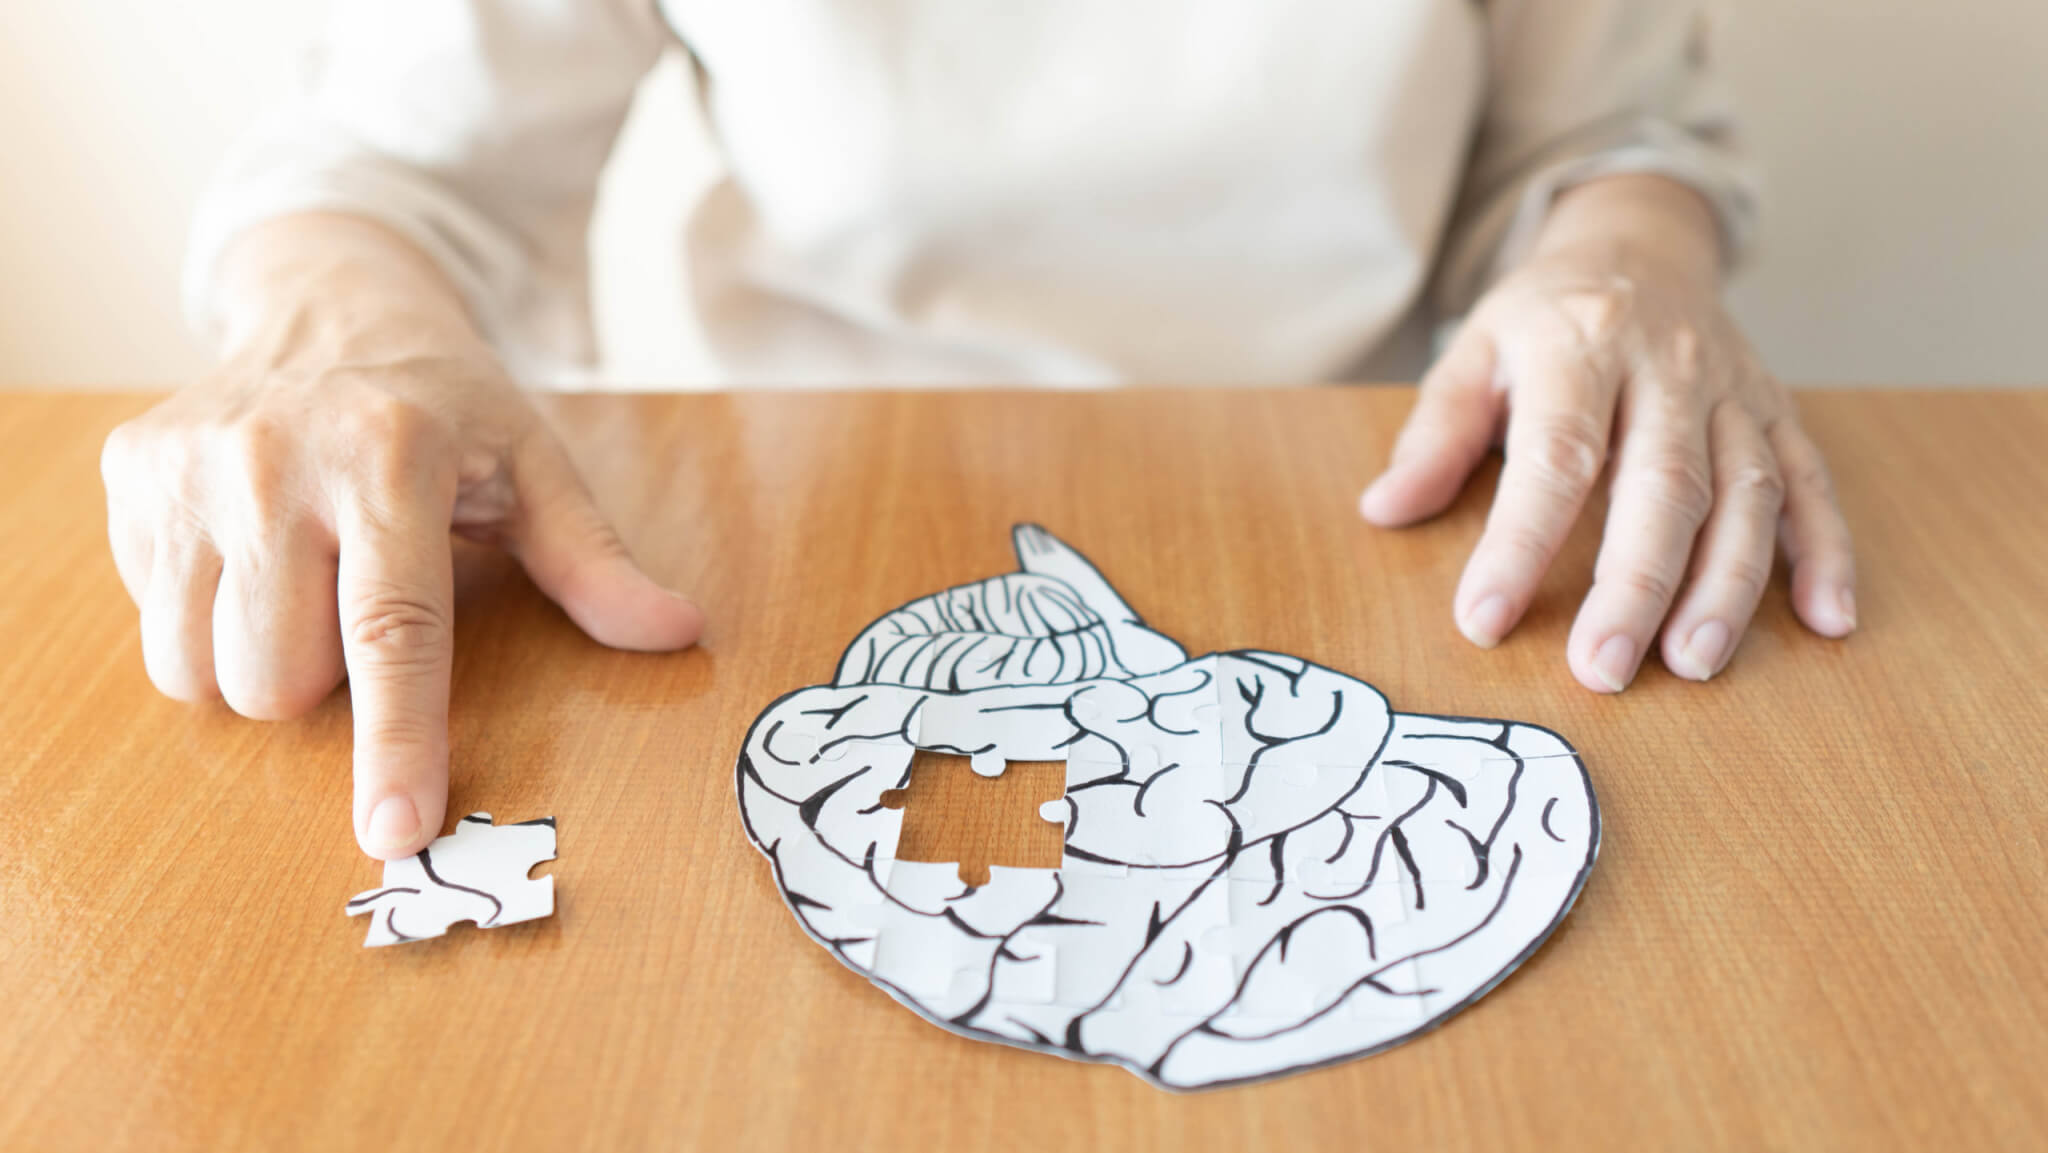 Dementia, Alzheimer's, brain puzzle